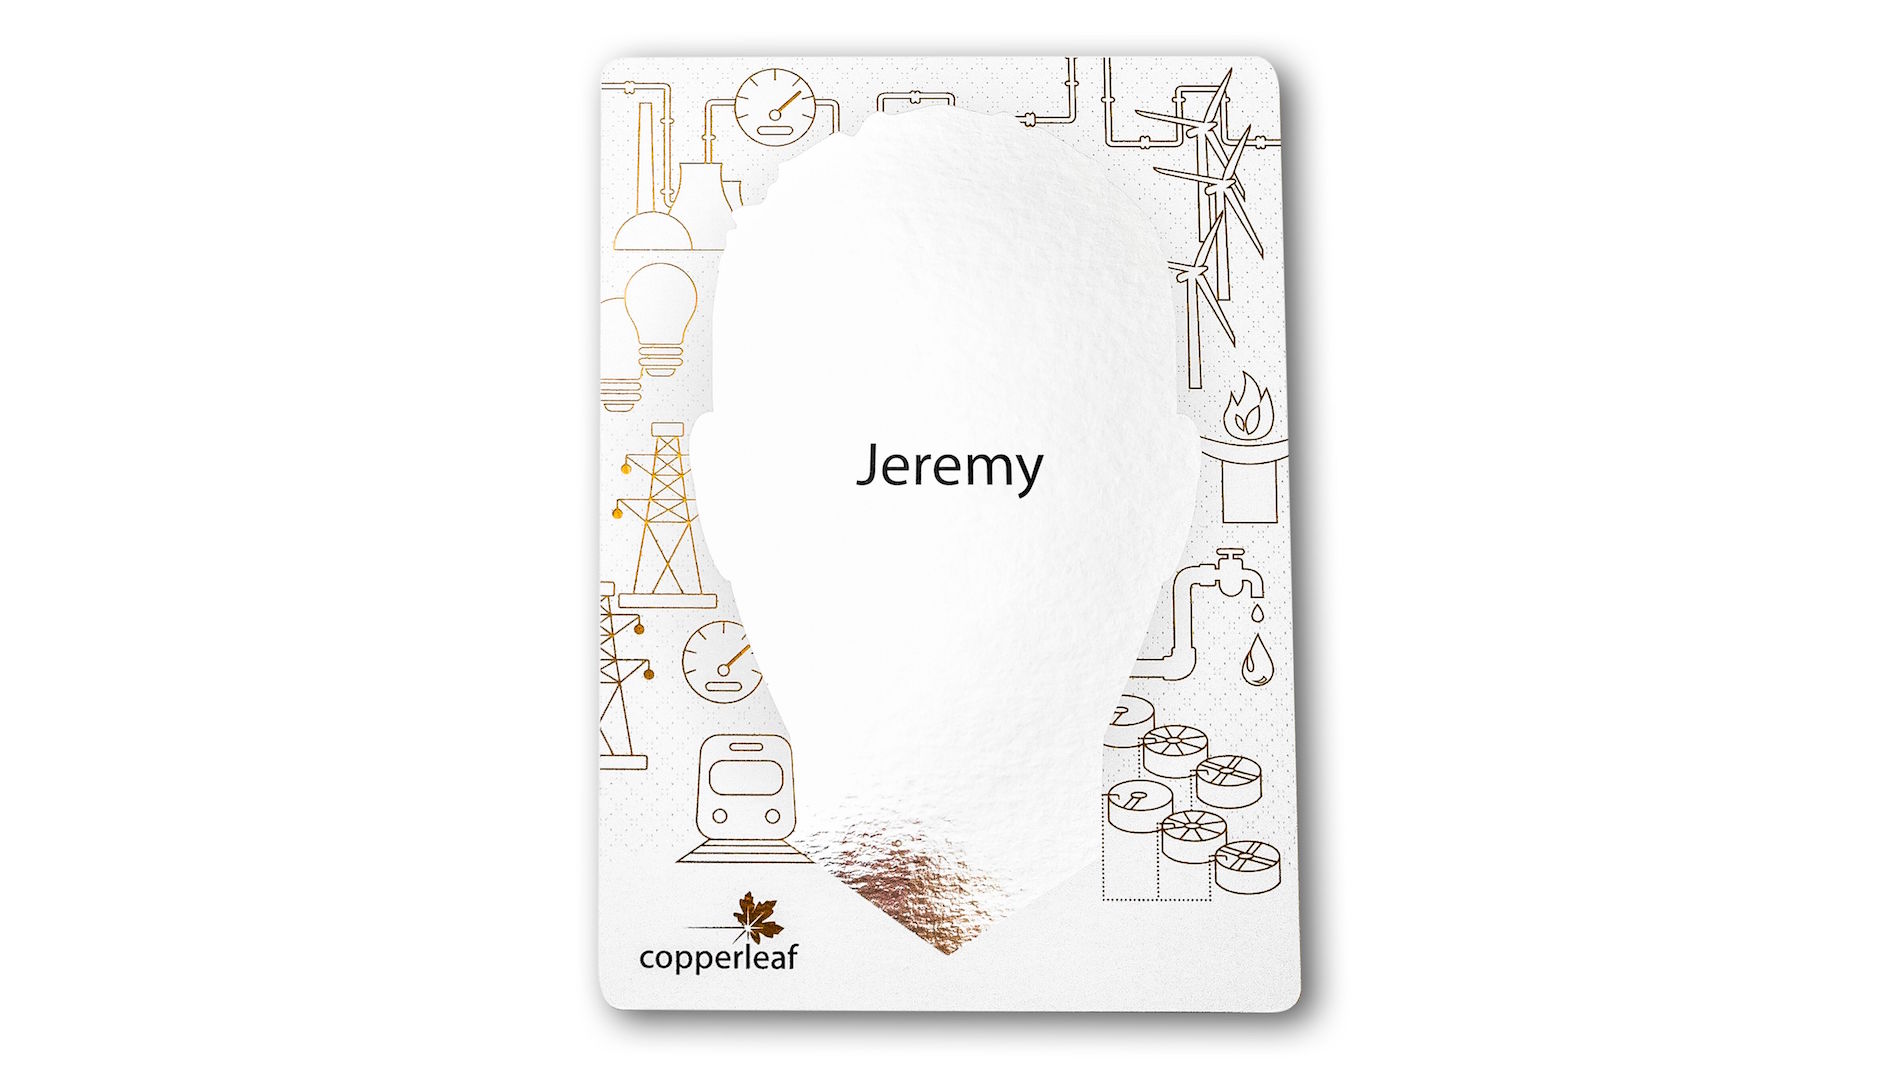 Copperleaf invitation mailer - PaperSpecs